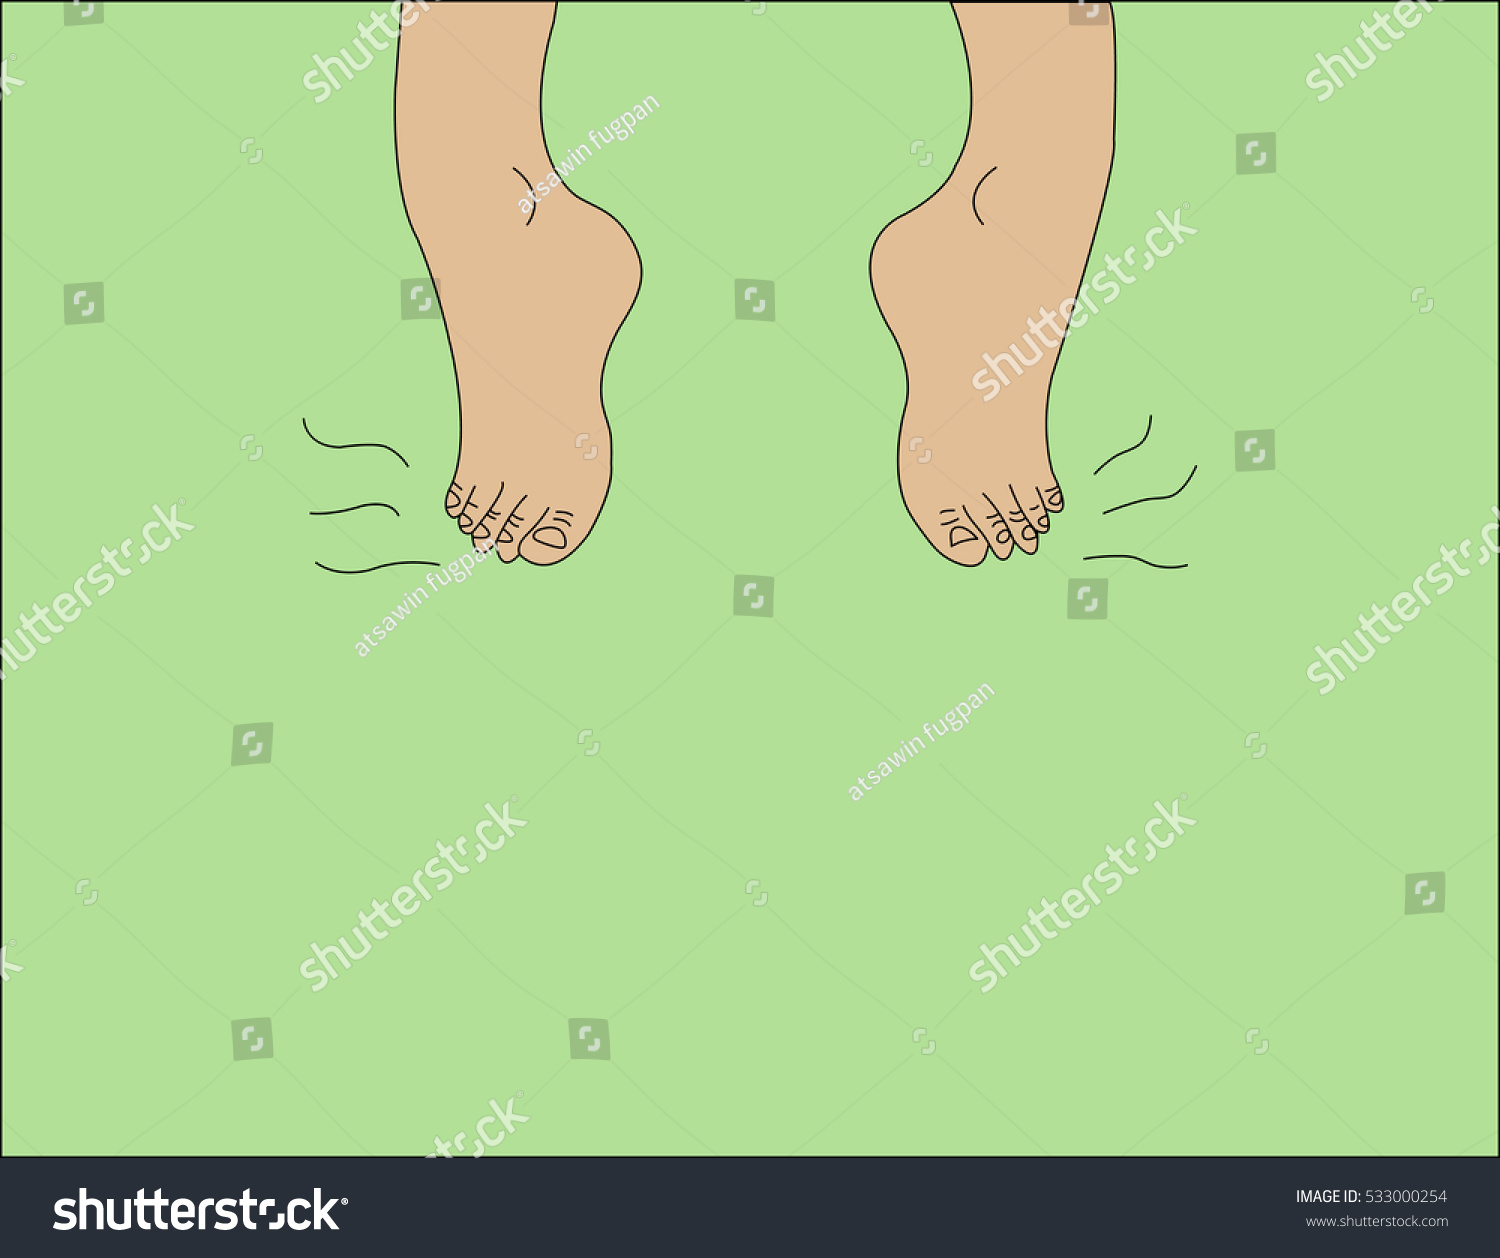 SVG of smelly feet svg